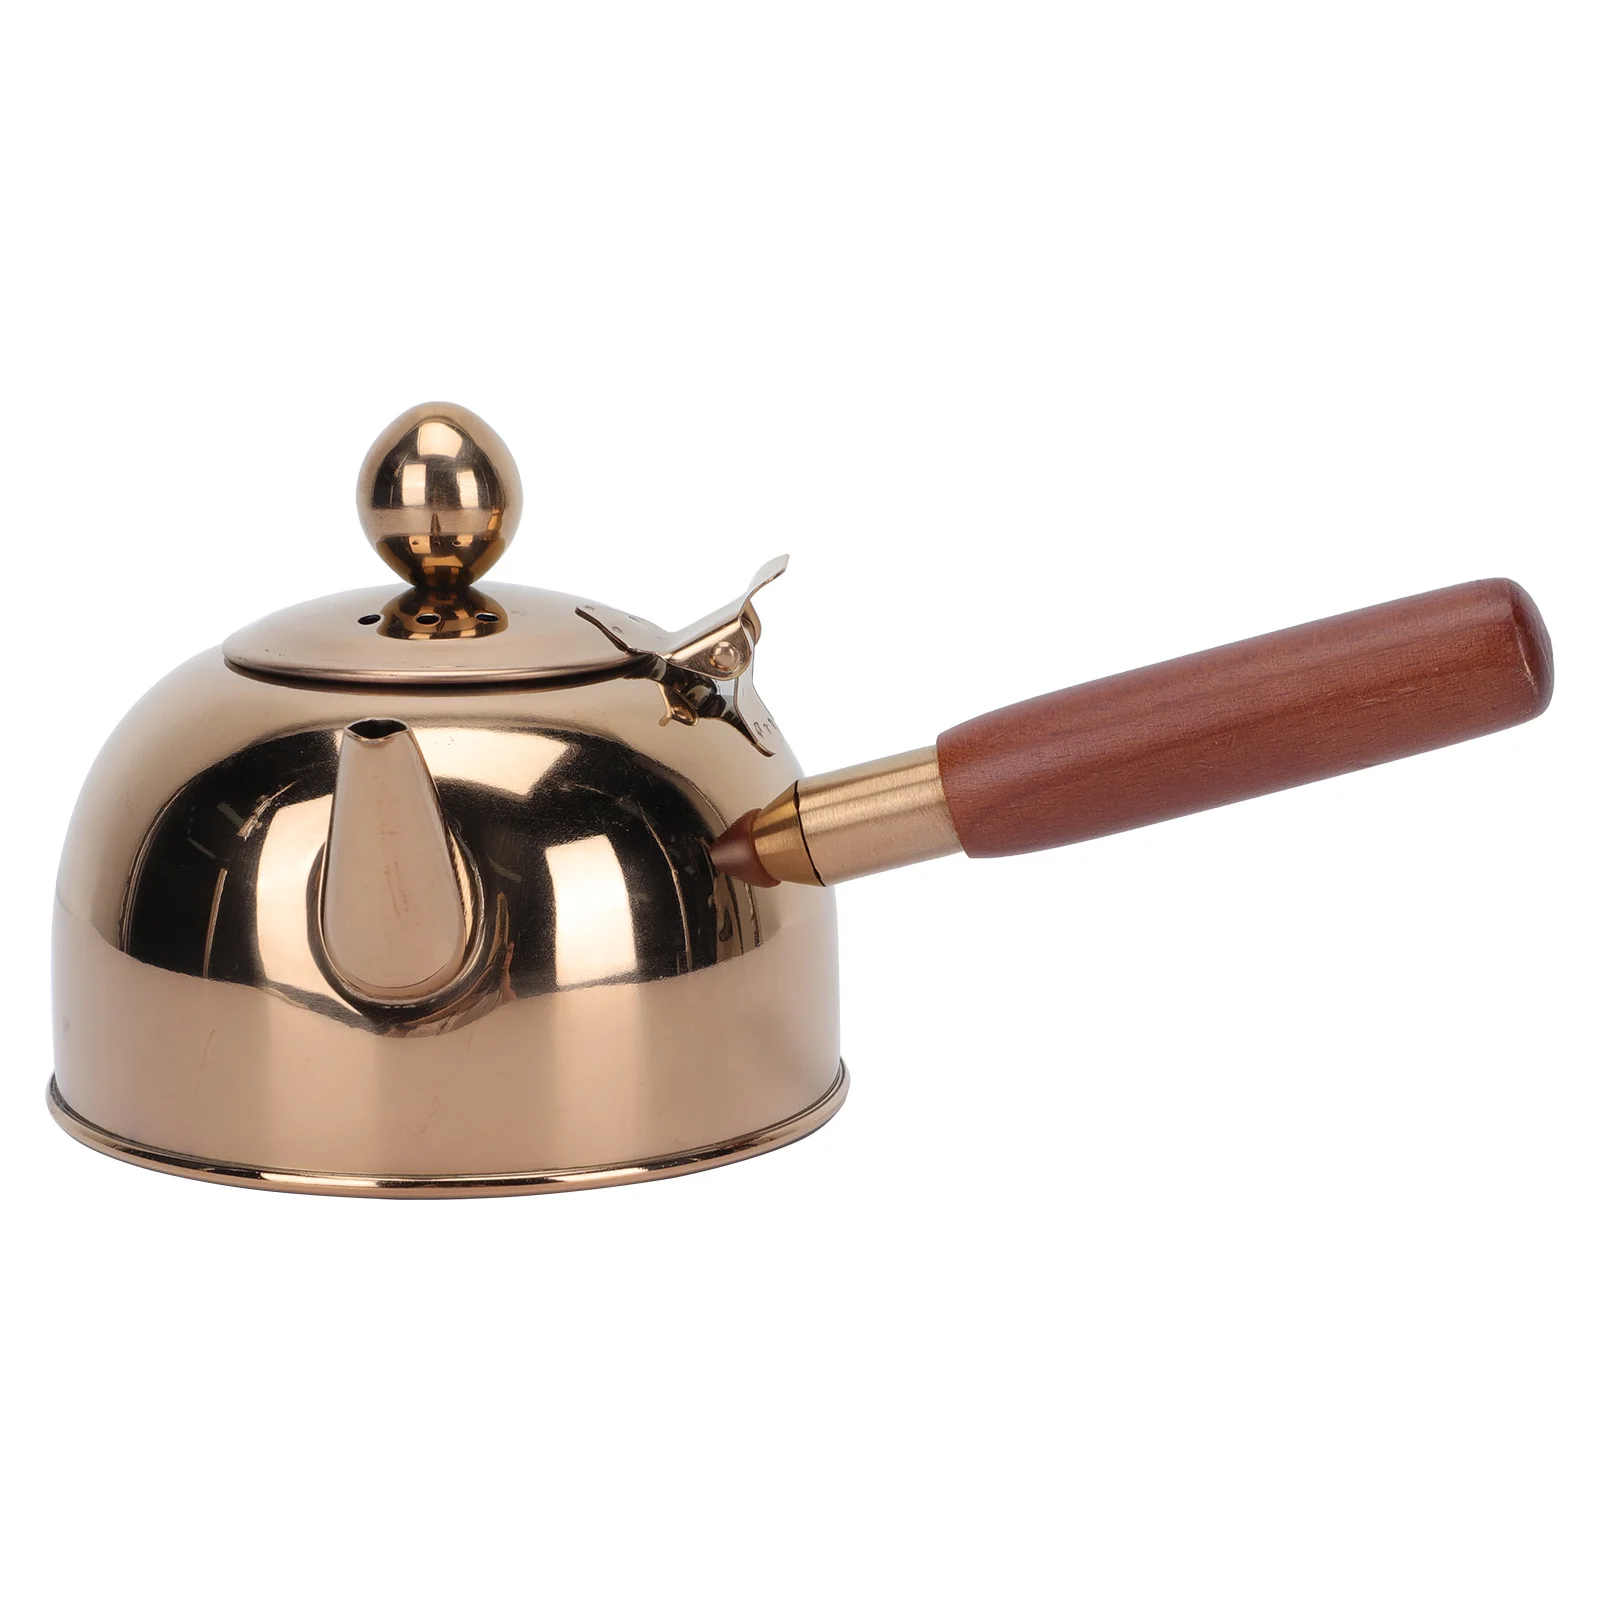 

Kettle Tea Teapot Pot Stovetop Stainless Steel Stove Teakettle Water Whistling Coffee Japanese Gasboiling Stylekettles